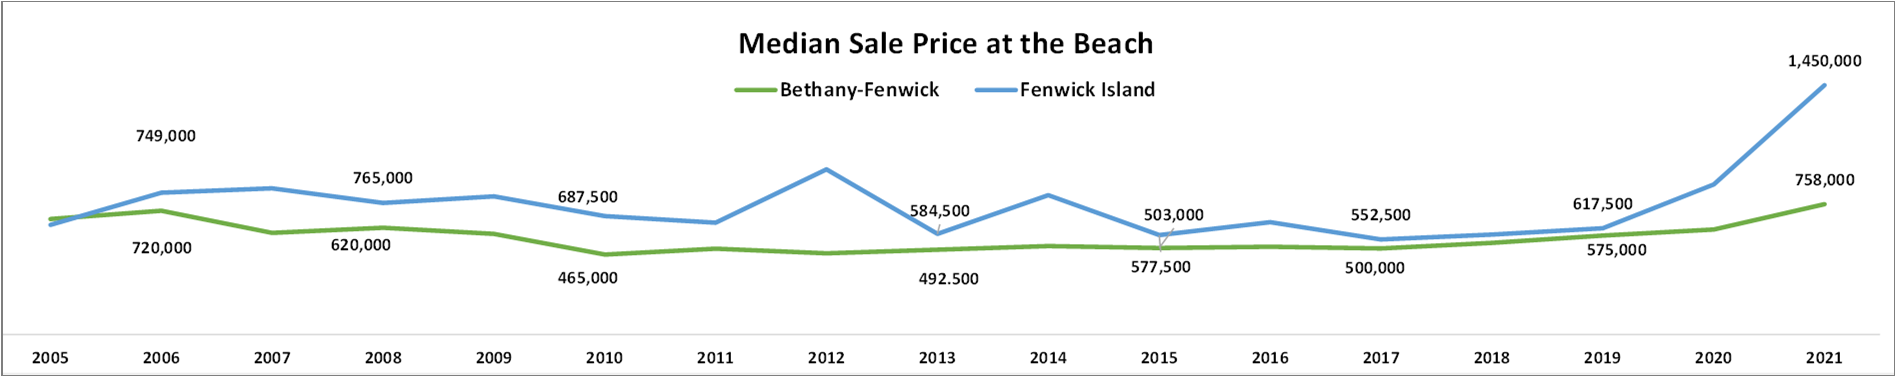 Fenwick Island median sale price